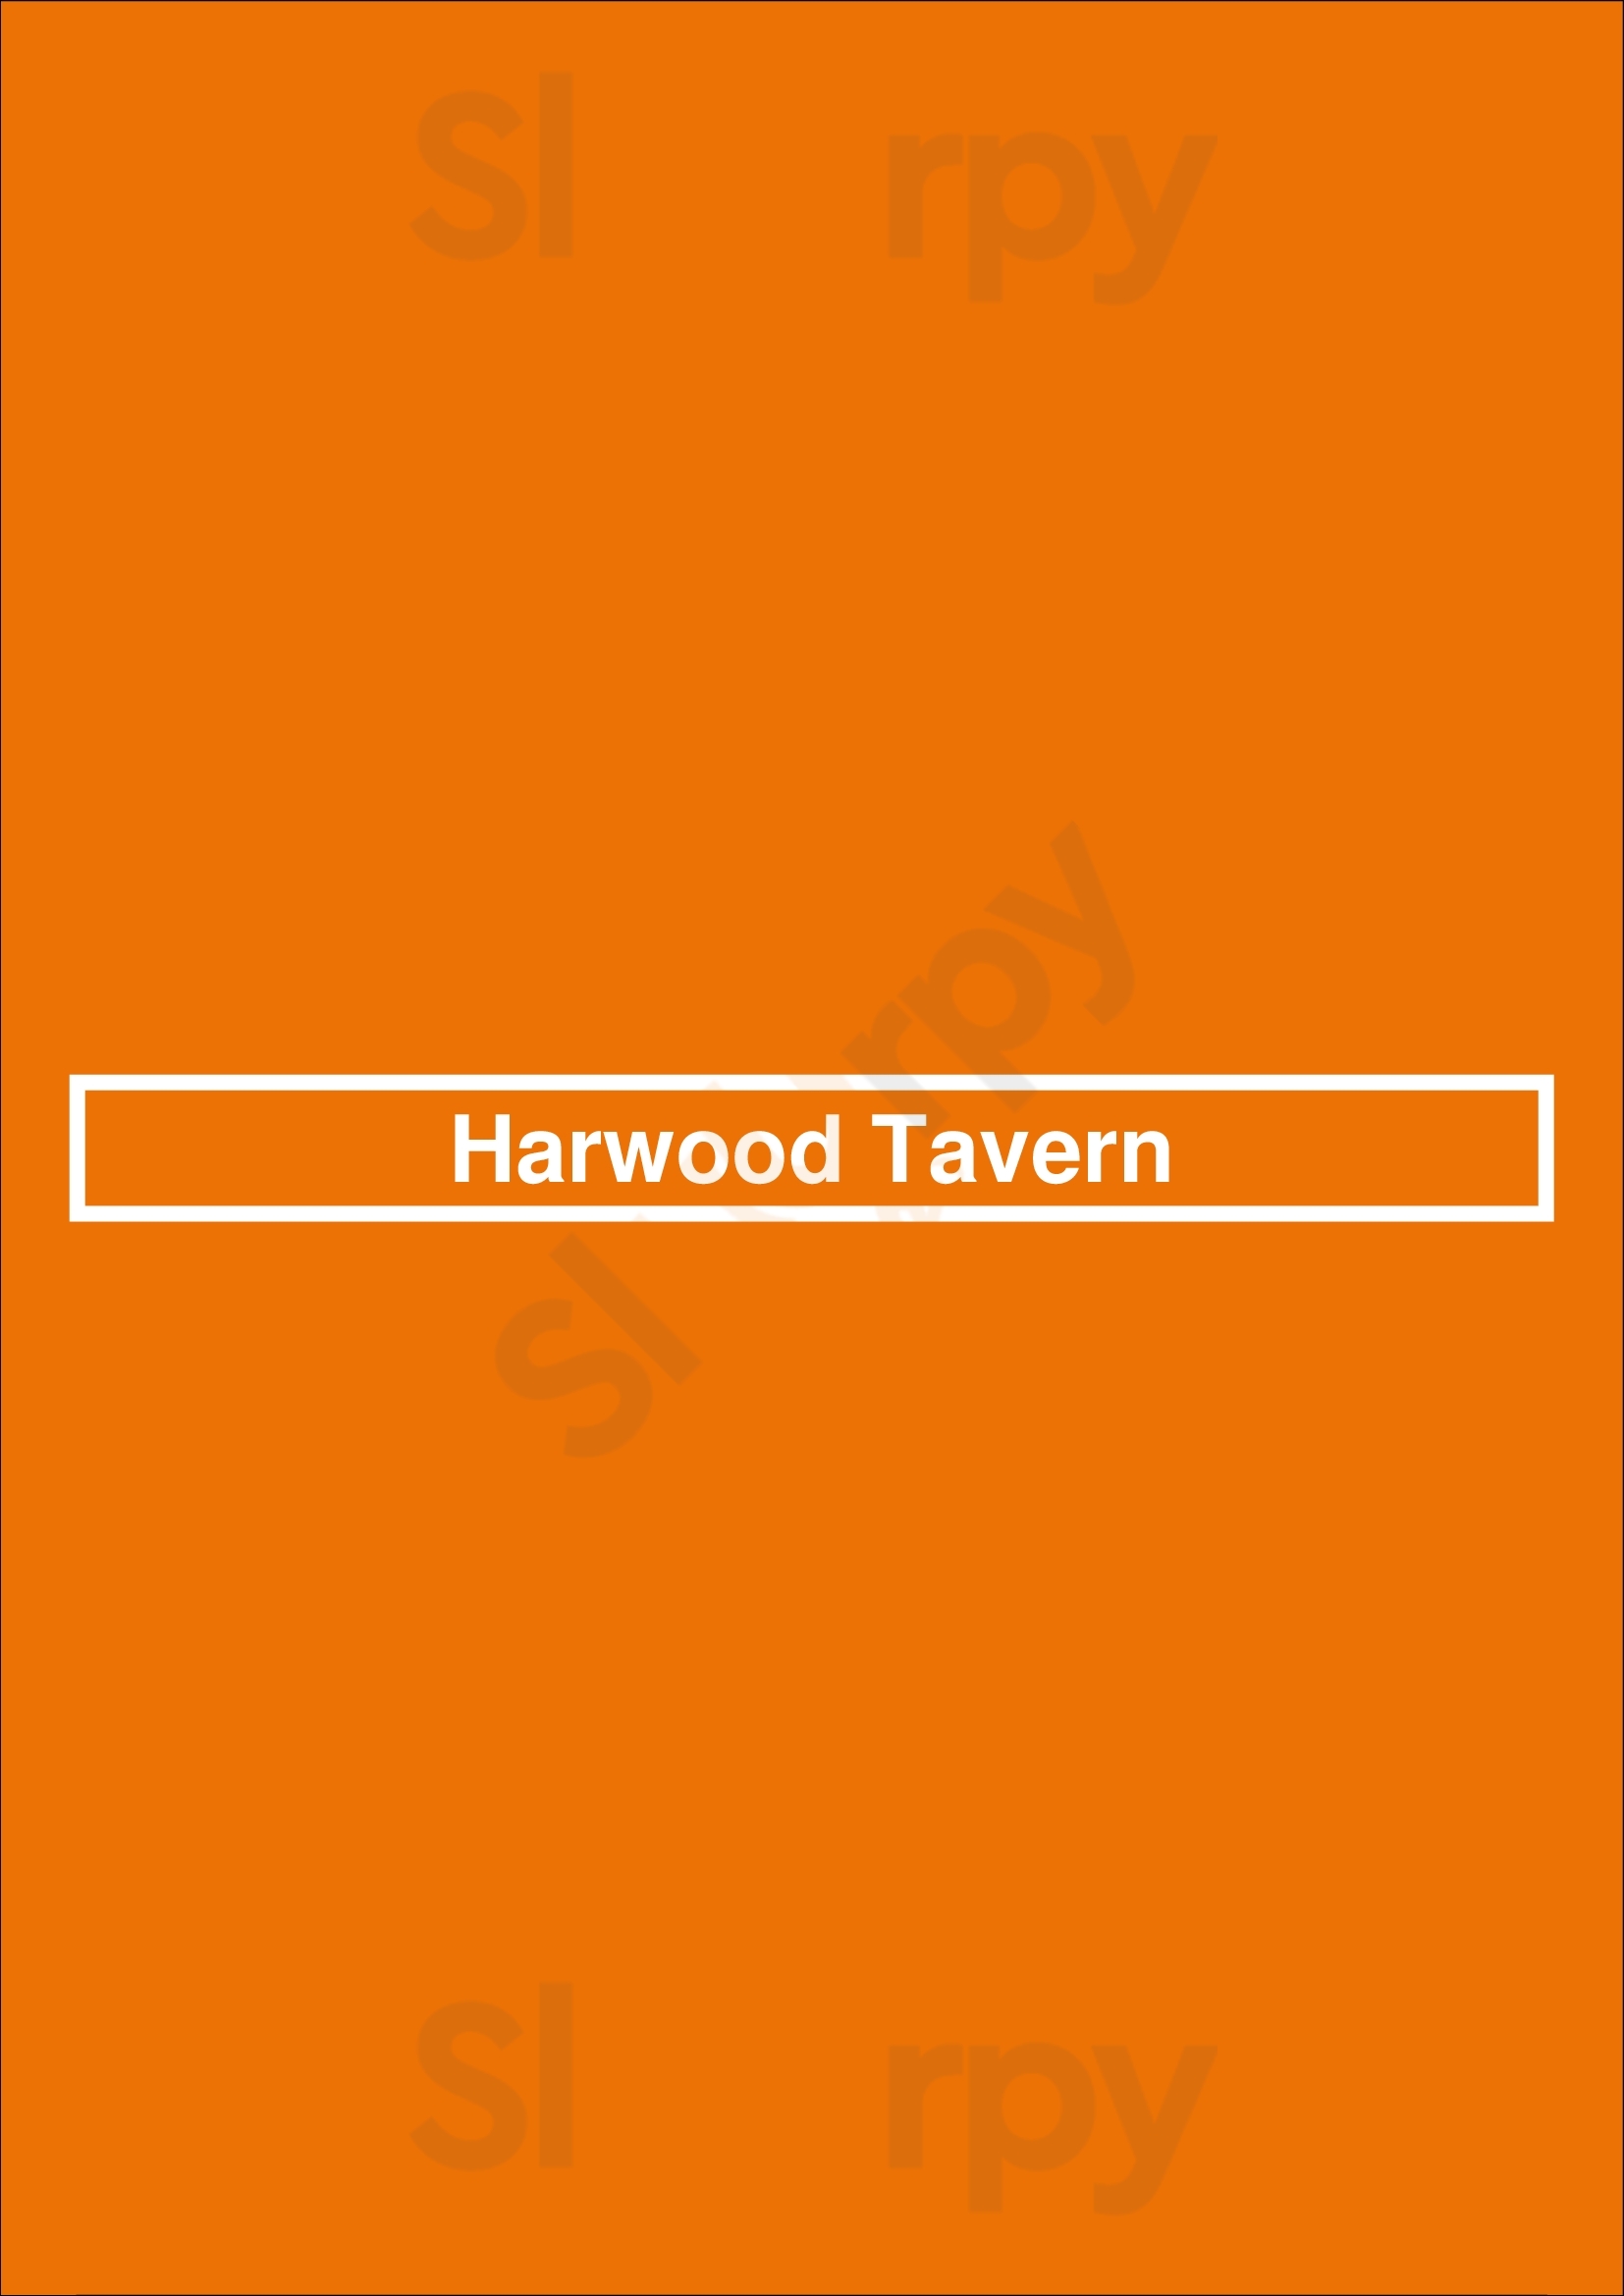 Harwood Tavern Dallas Menu - 1